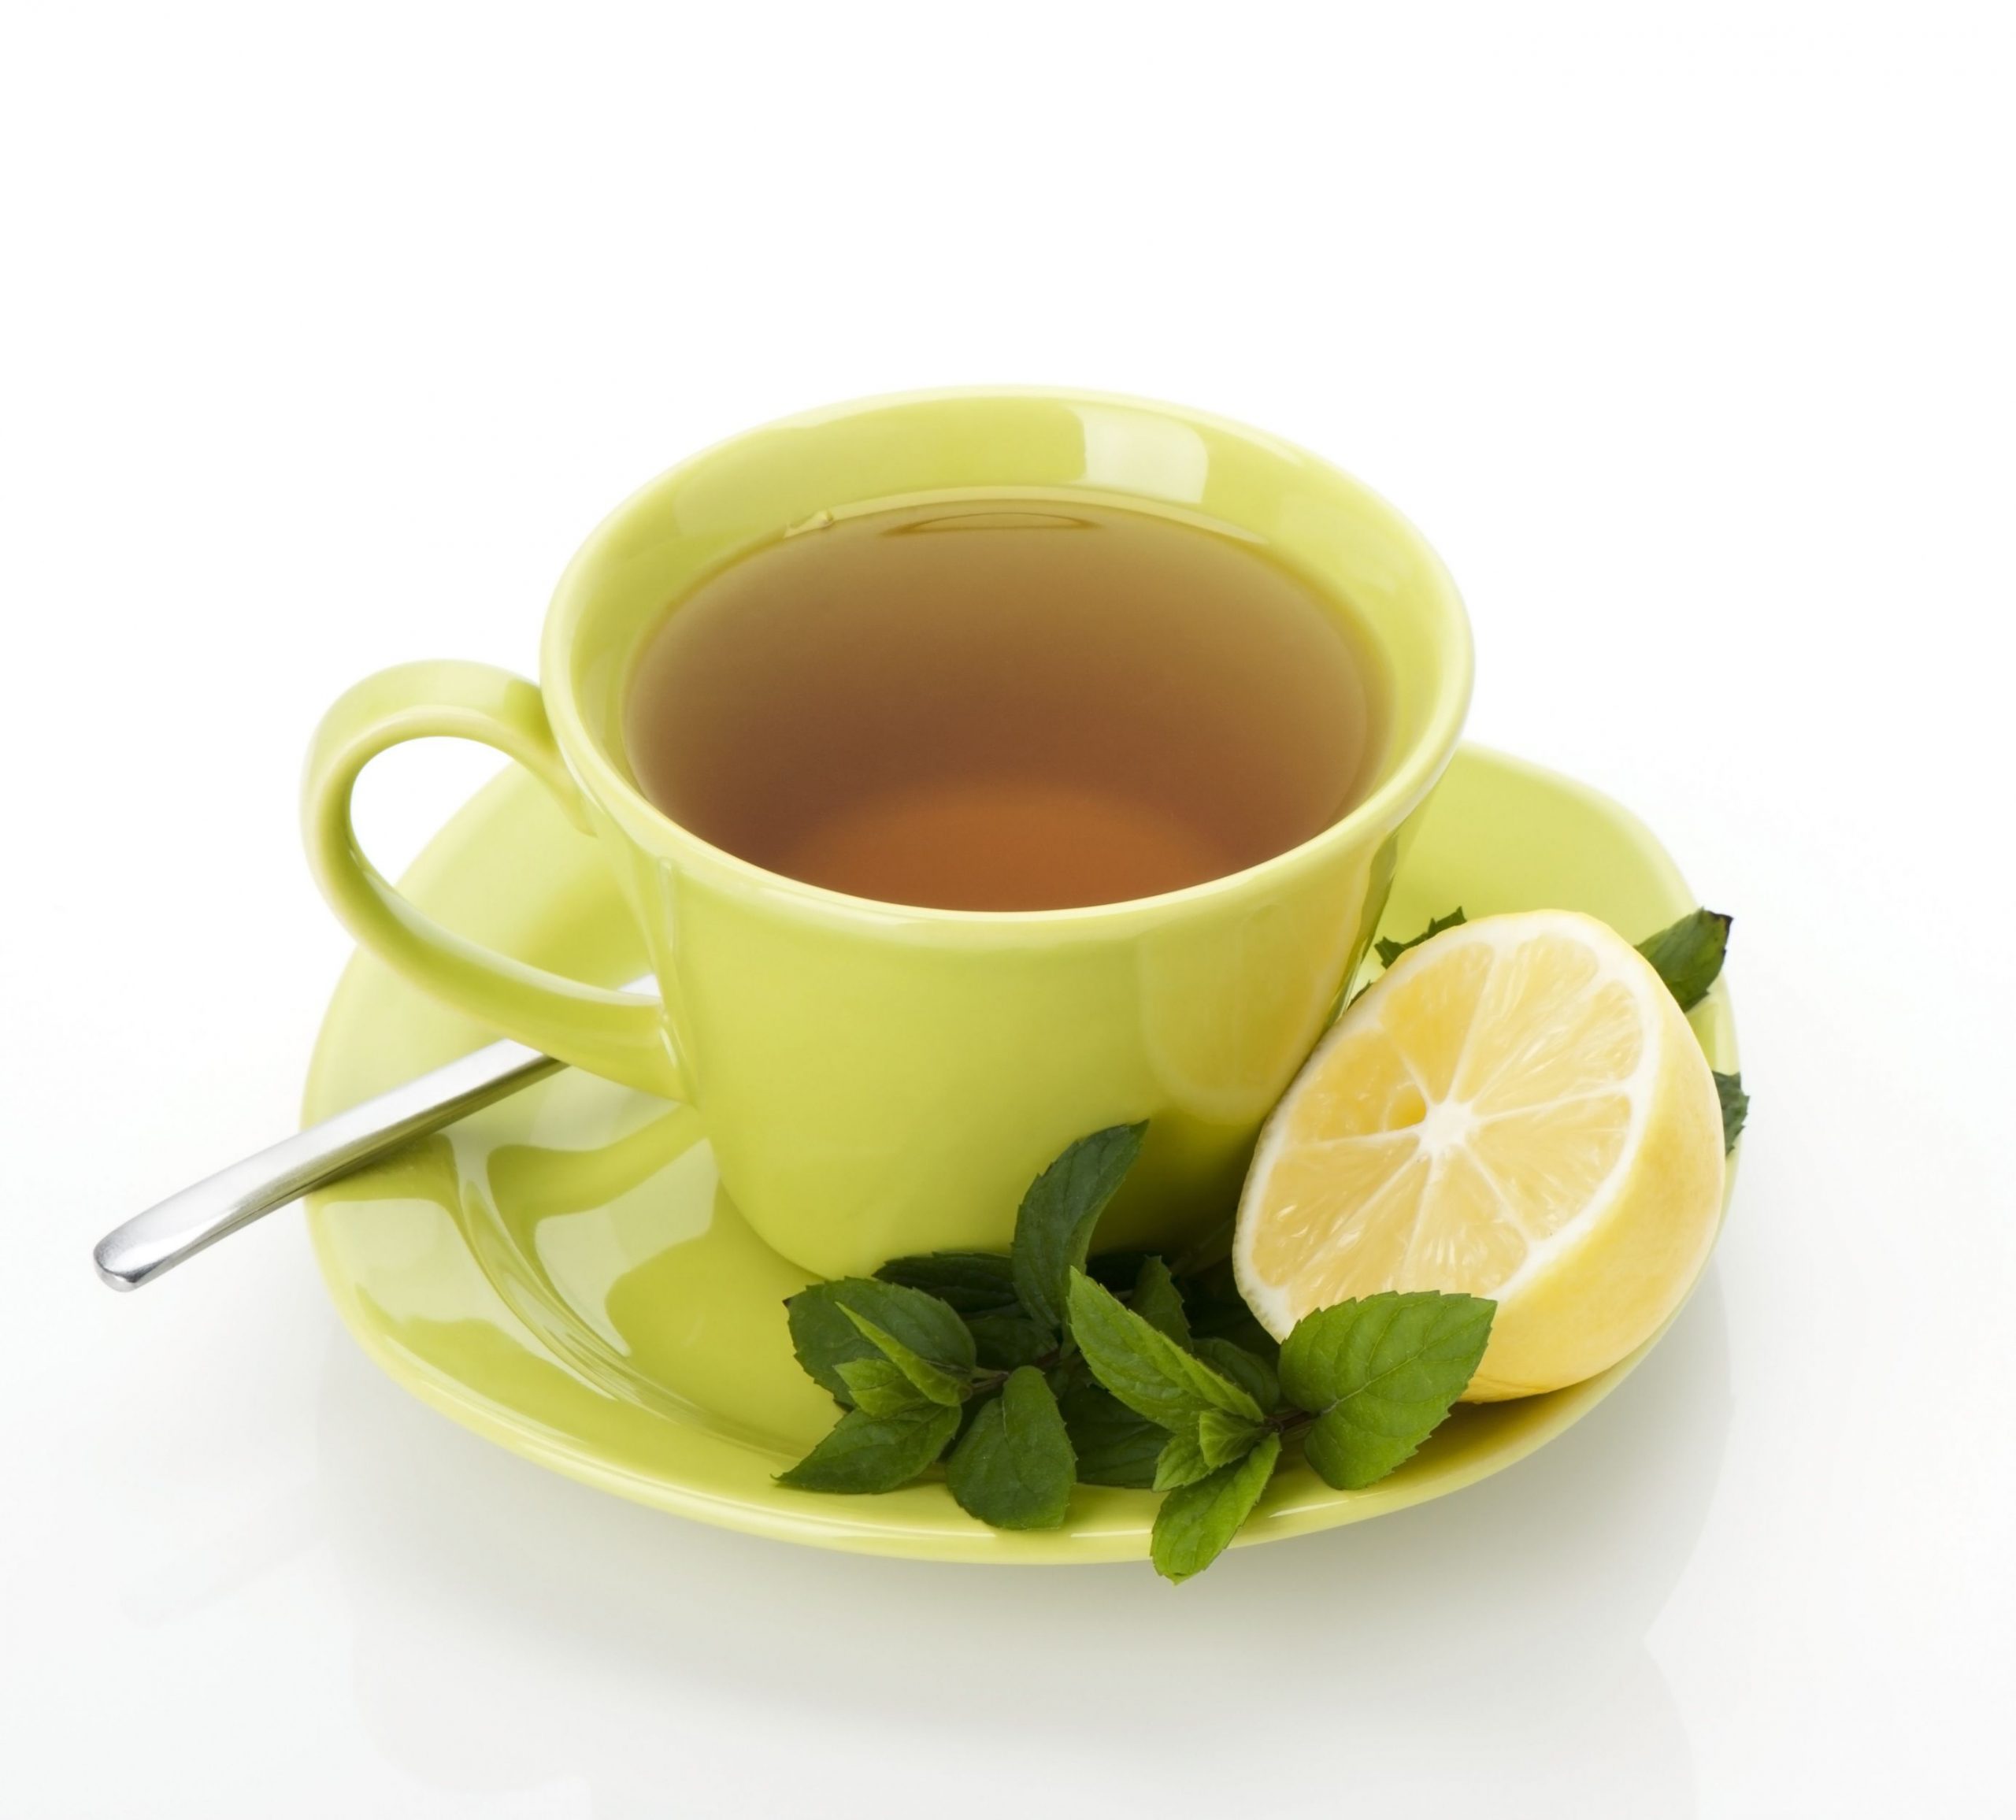 Does lemon tea reduce inflammation?